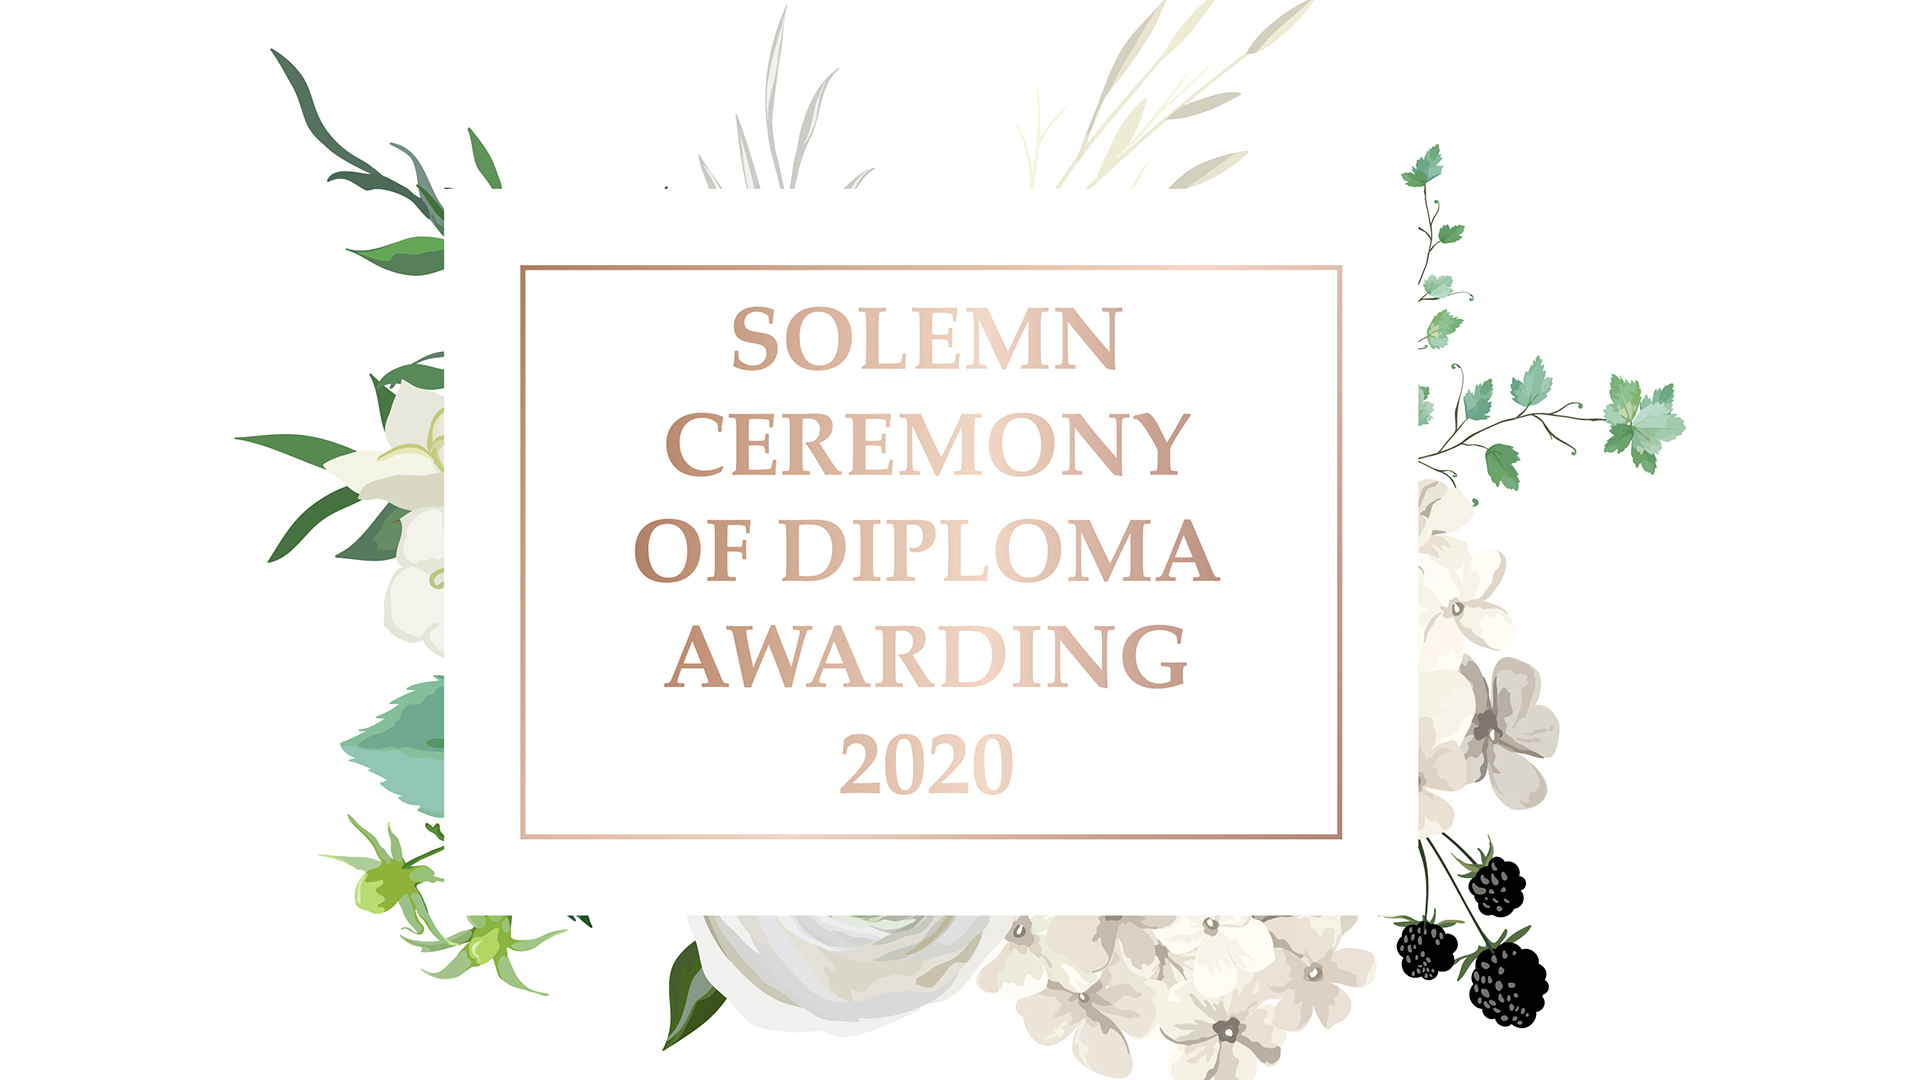 Solemn Ceremony of Diploma Awarding